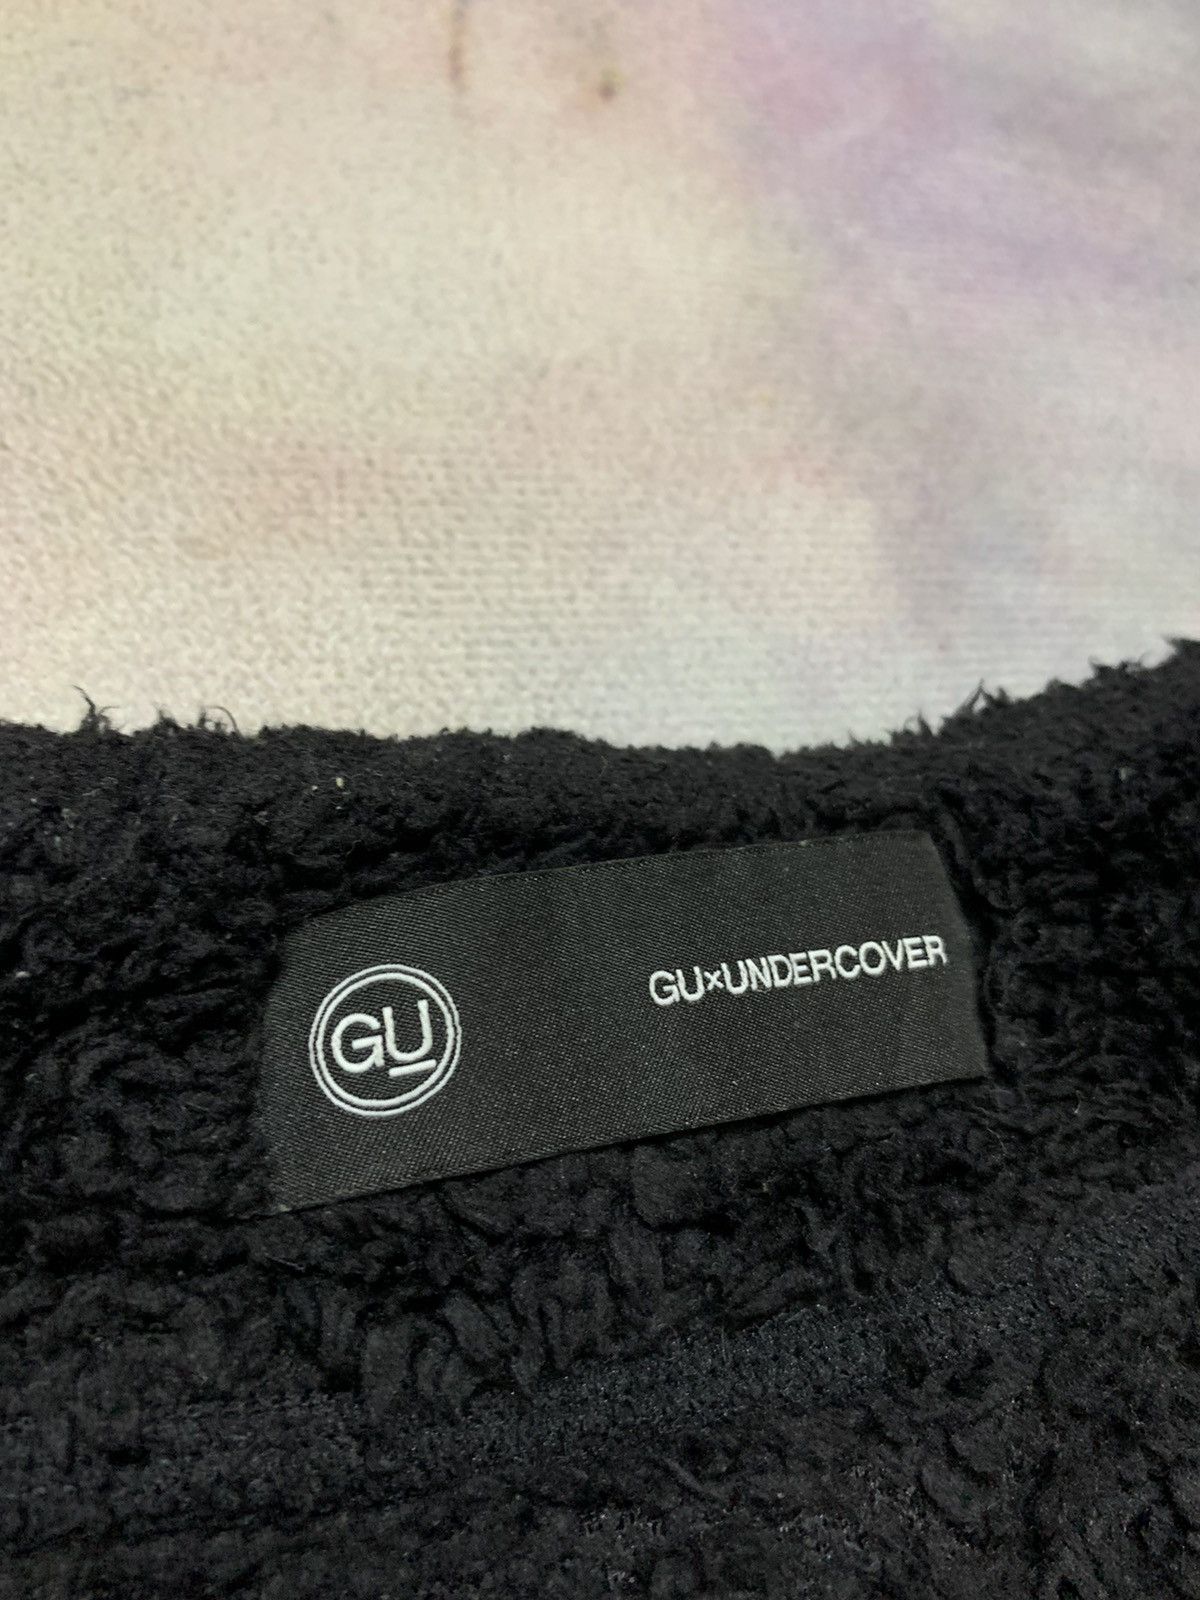 Undercover Gu Fleece Cardigan Jacket Oversized - 6